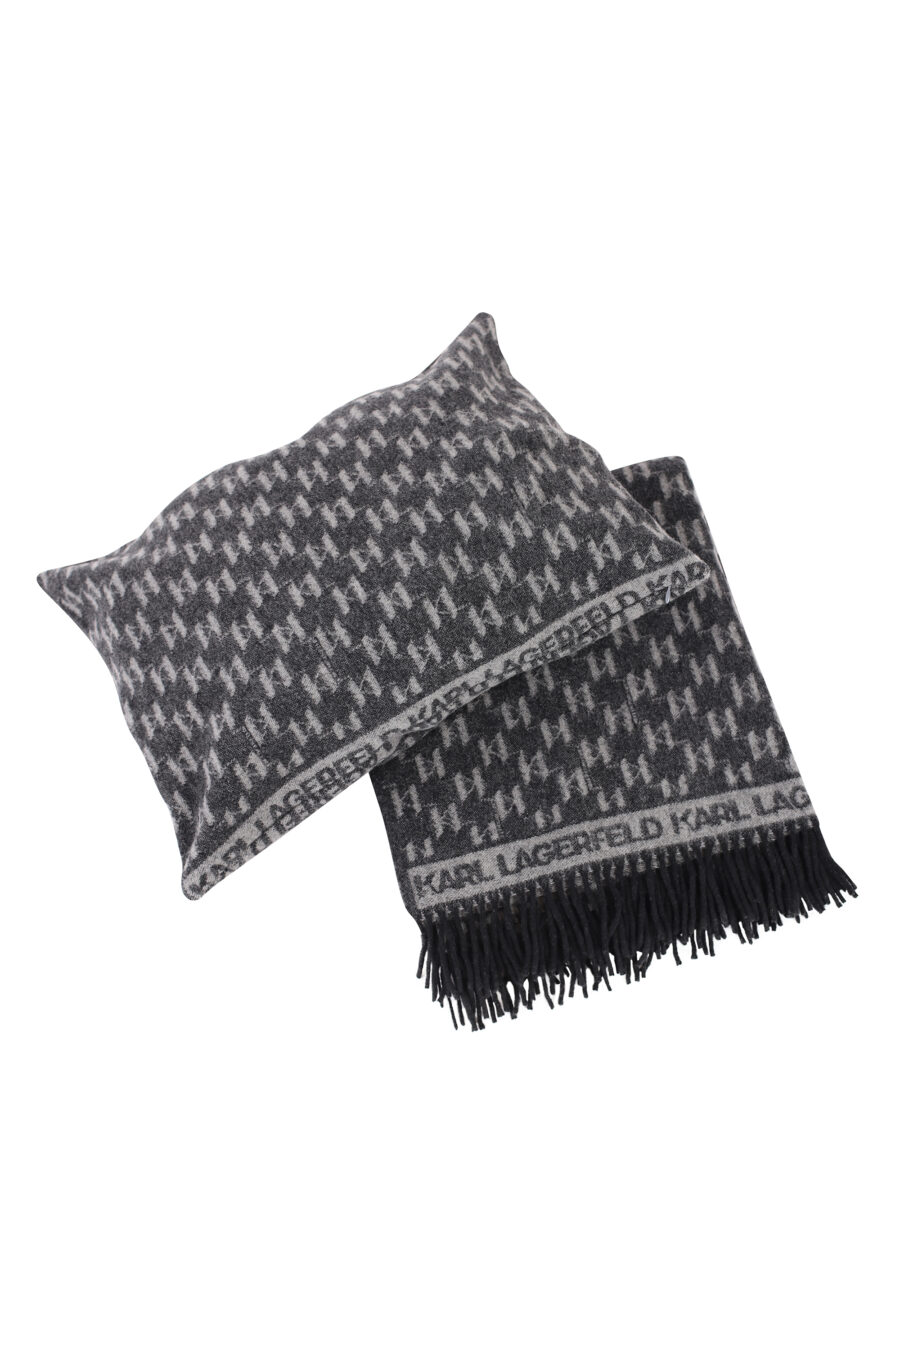 Black blanket and pillowcase set with monogrammed logo - IMG 1463